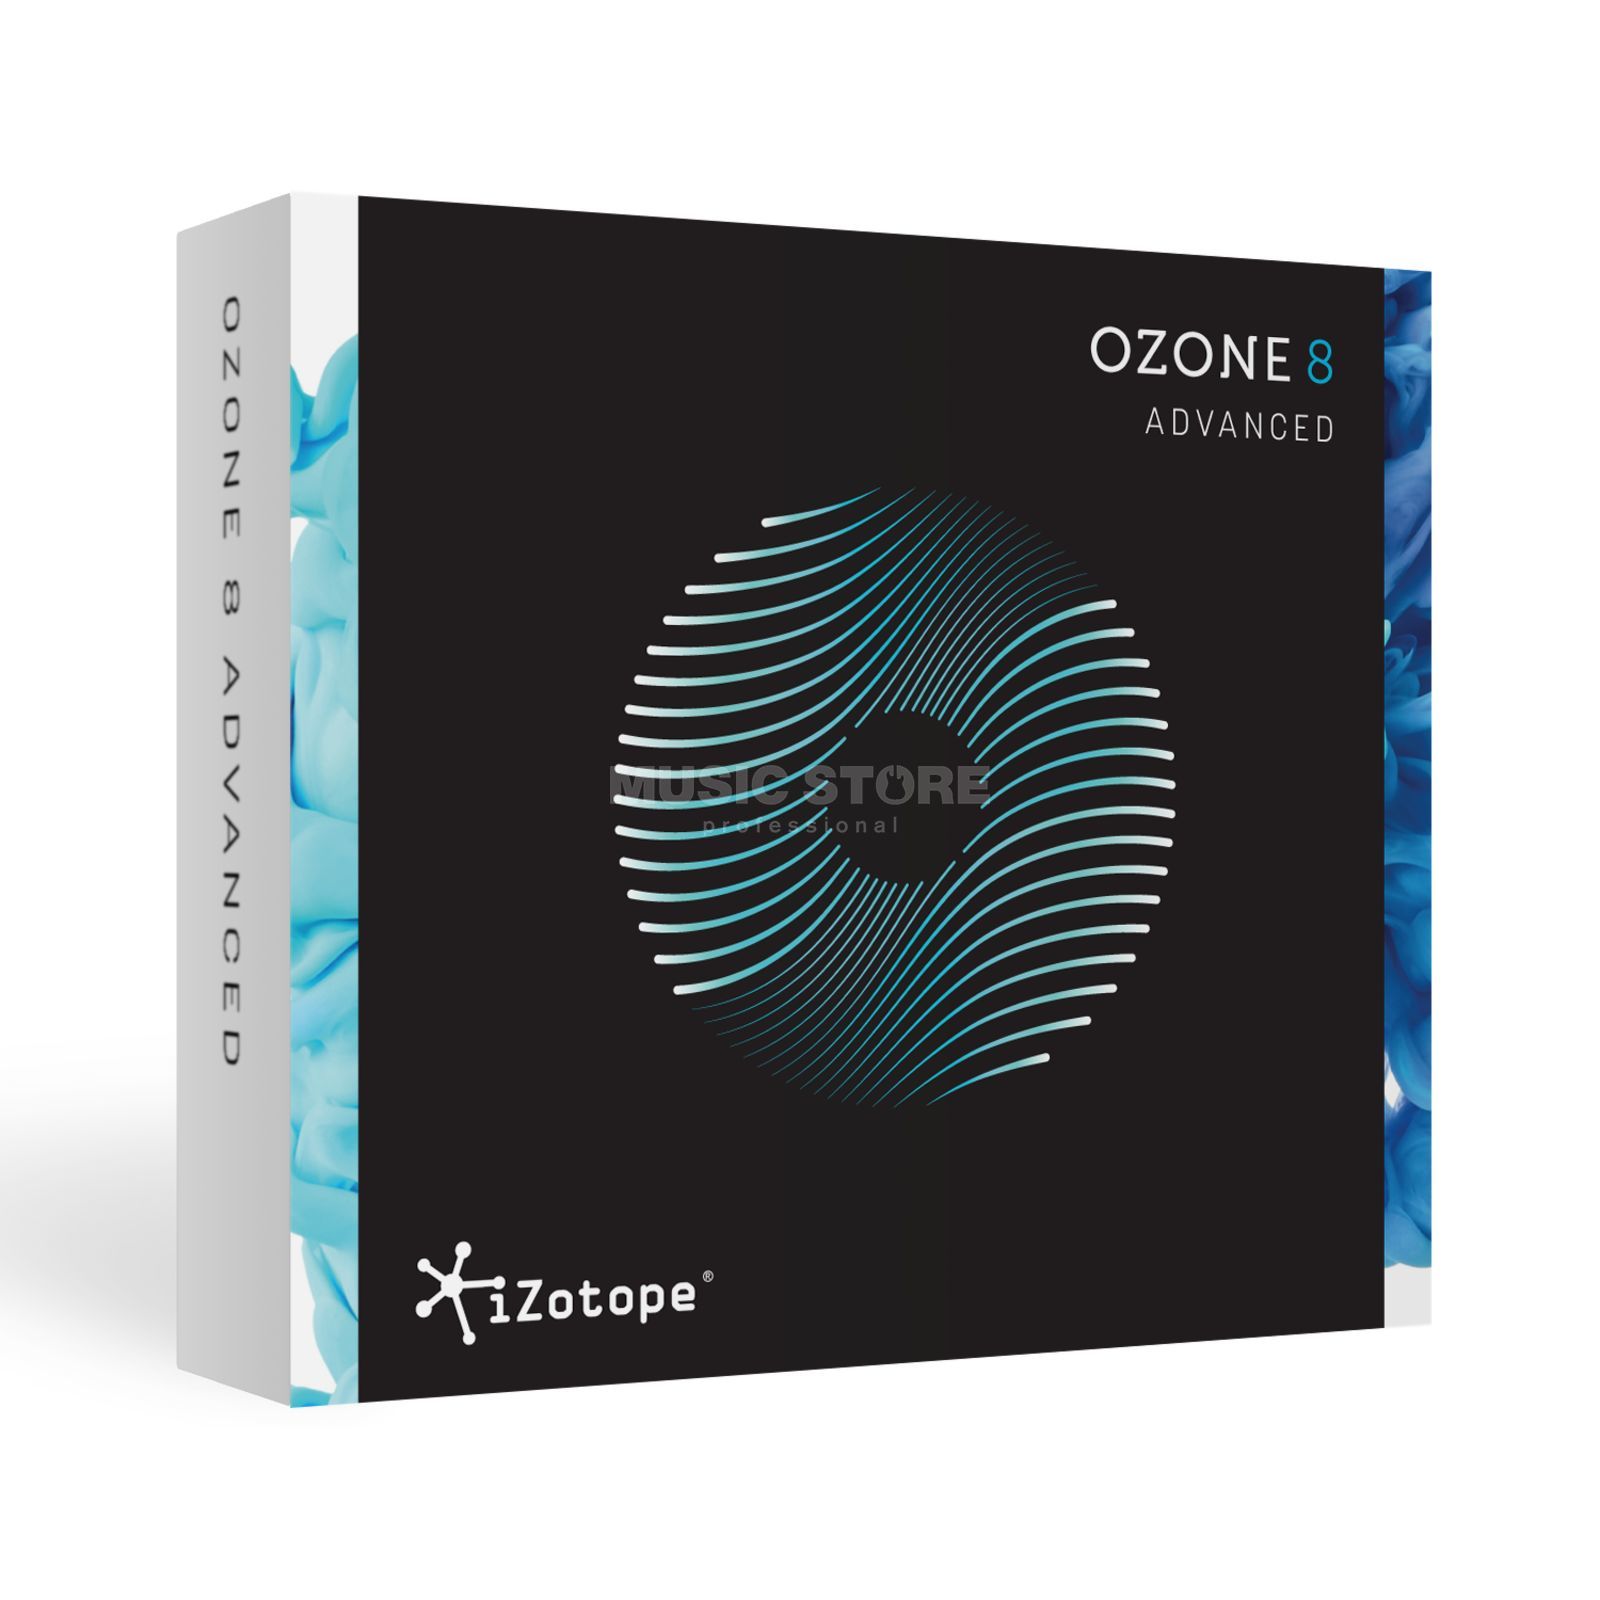 ozone 9 mac download